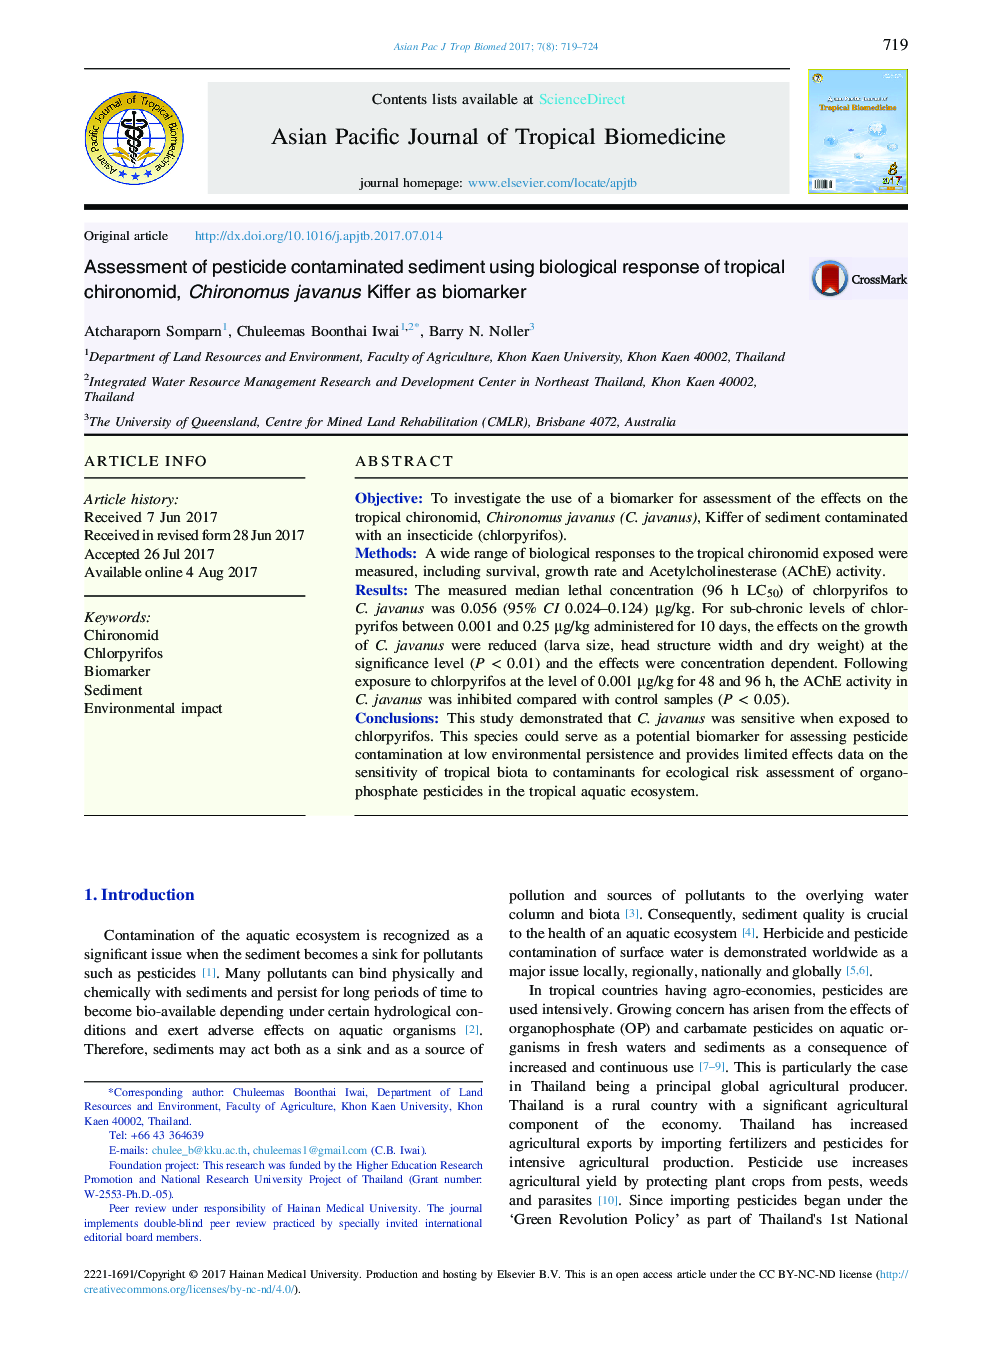 Assessment of pesticide contaminated sediment using biological response of tropical chironomid, Chironomus javanus Kiffer as biomarker